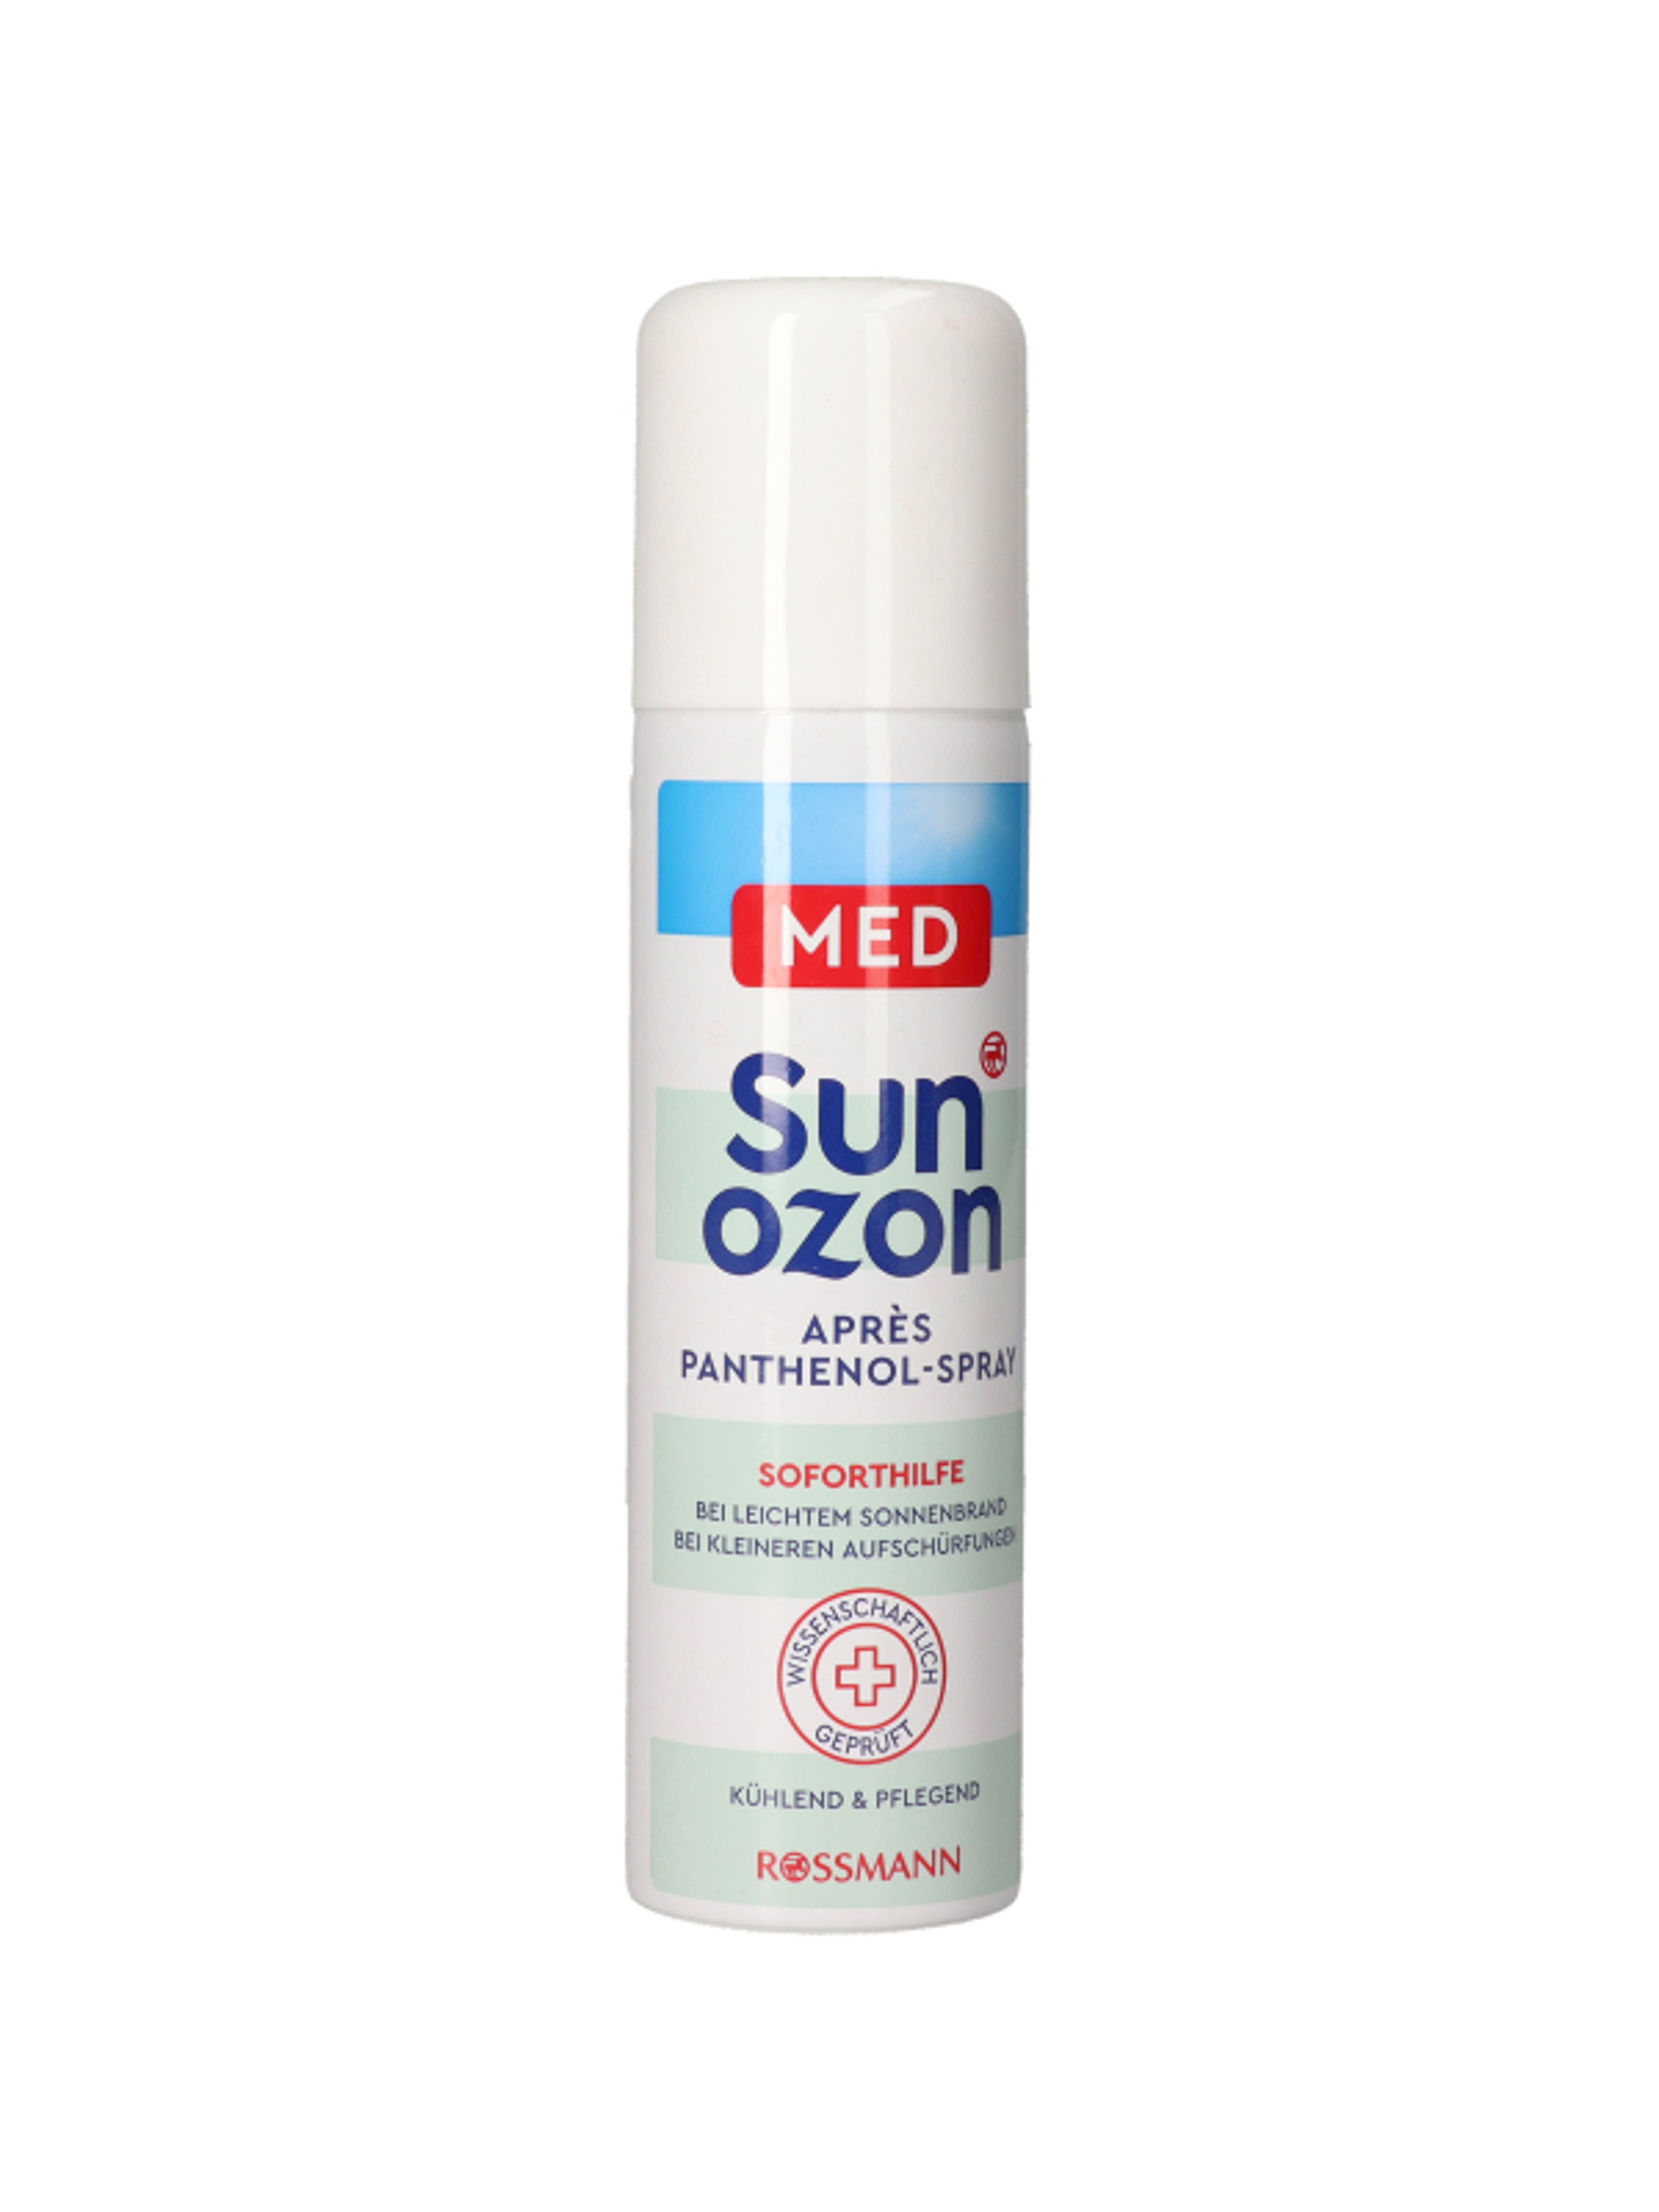 Sunozon Med napozás utáni panthenolos spray - 150 ml-4